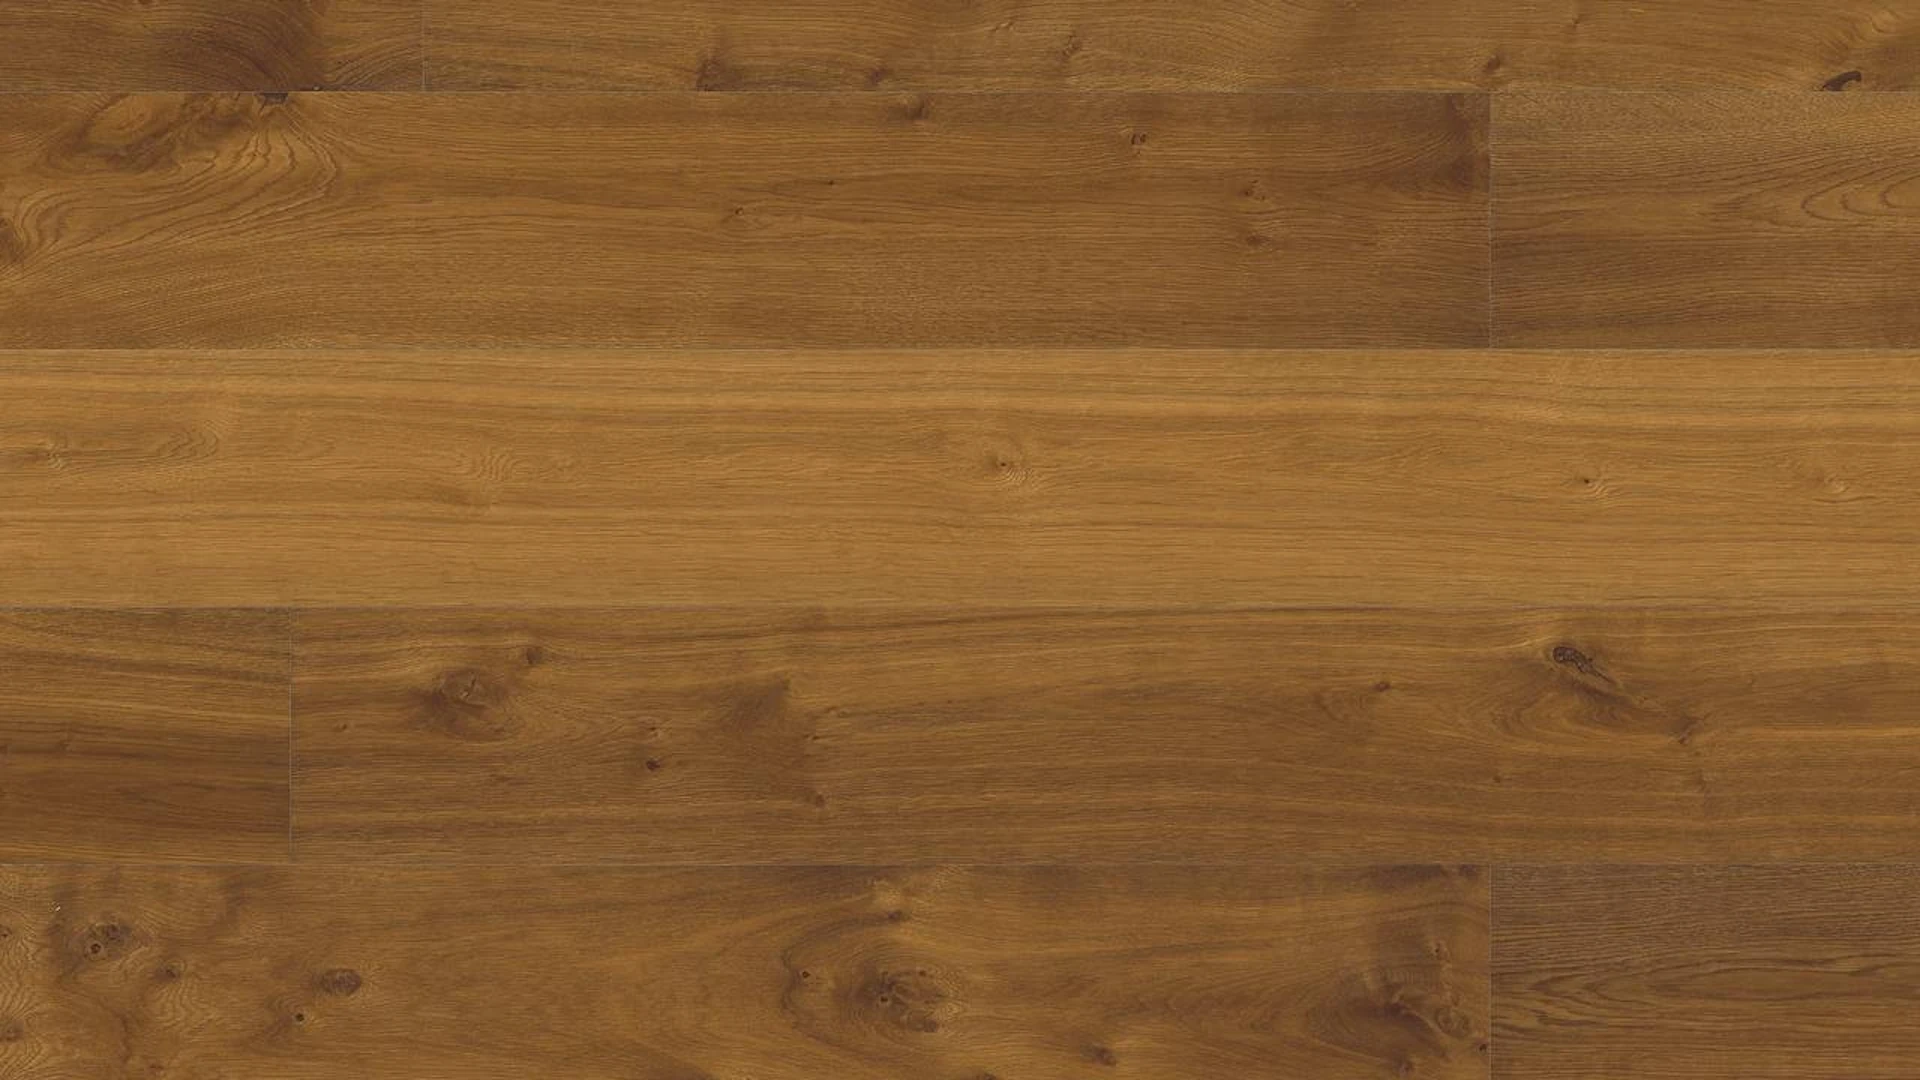 Kährs Parquet Flooring - Smaland Collection Oak Sevede (151NCSEK05KW240)